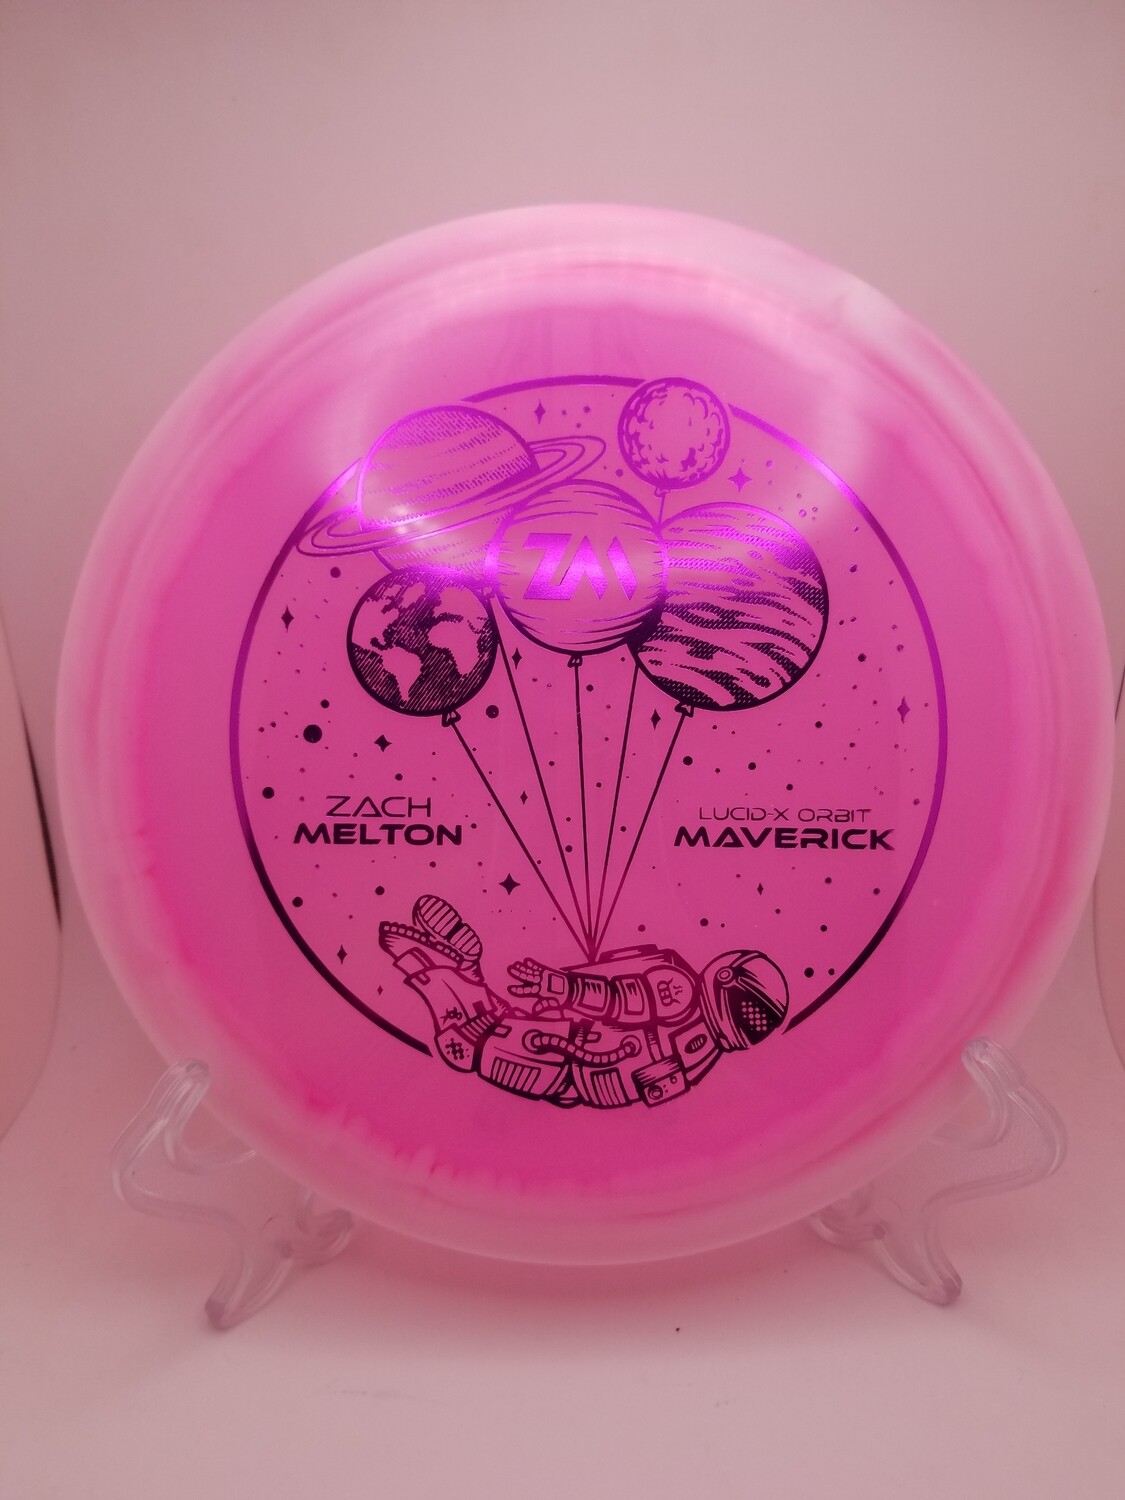 Lucid-X Orbit Maverick Zach Melton 2024 Pink 175g